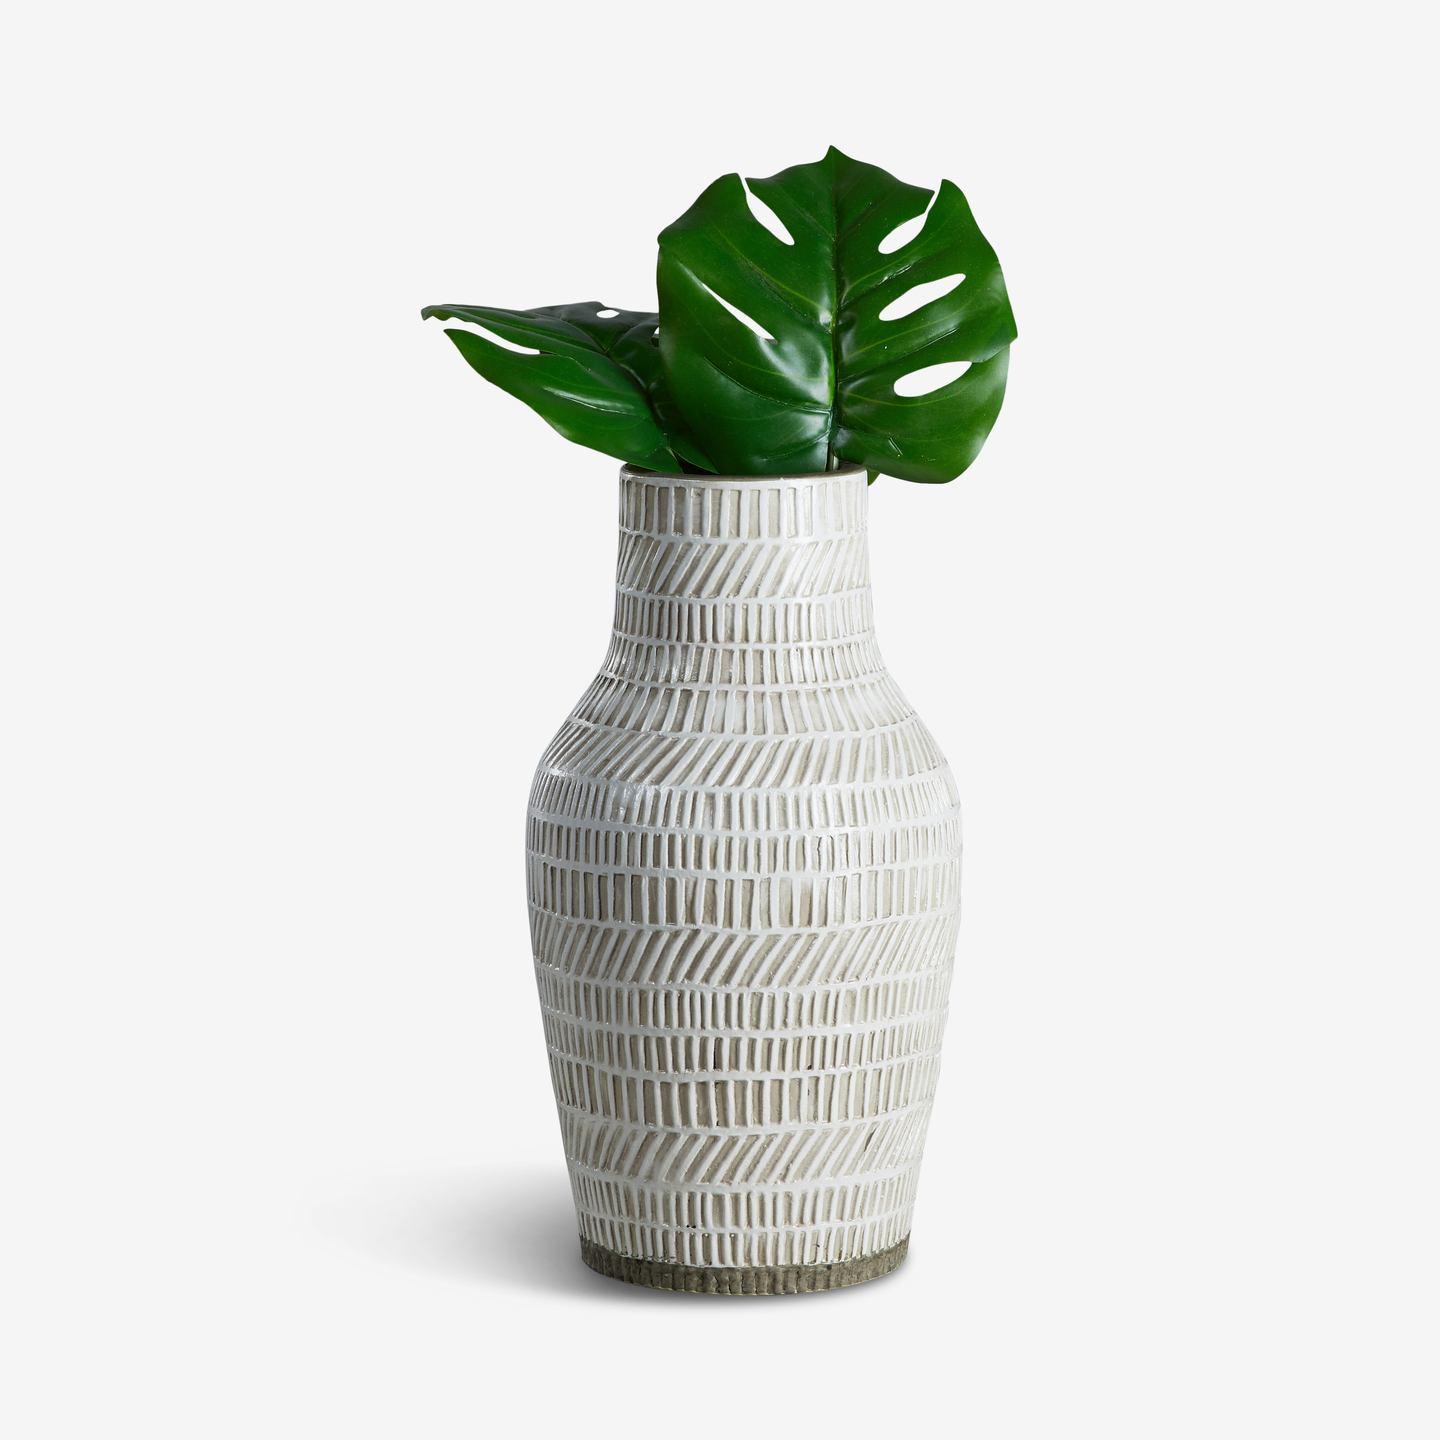 700_Lati-Vase_With-Leaf_Industrial_Living-Room-3 2020